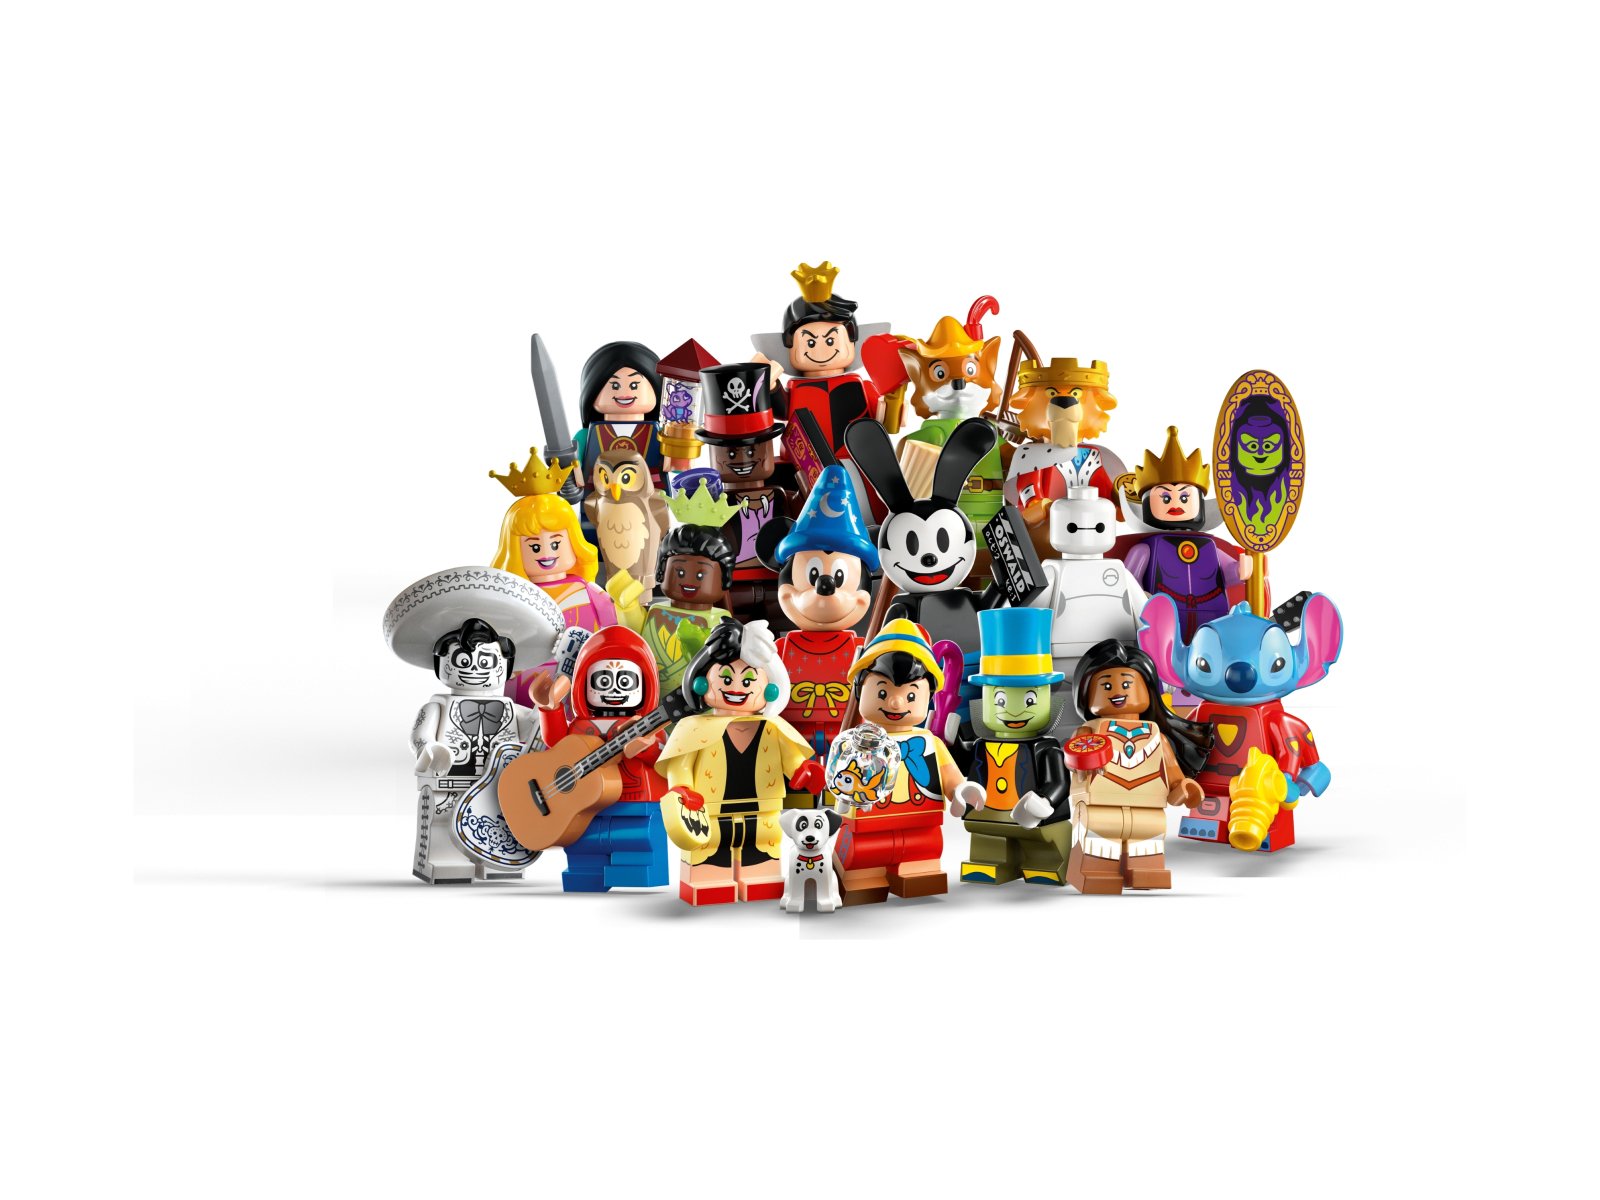 LEGO Minifigures 71038 Disney 100